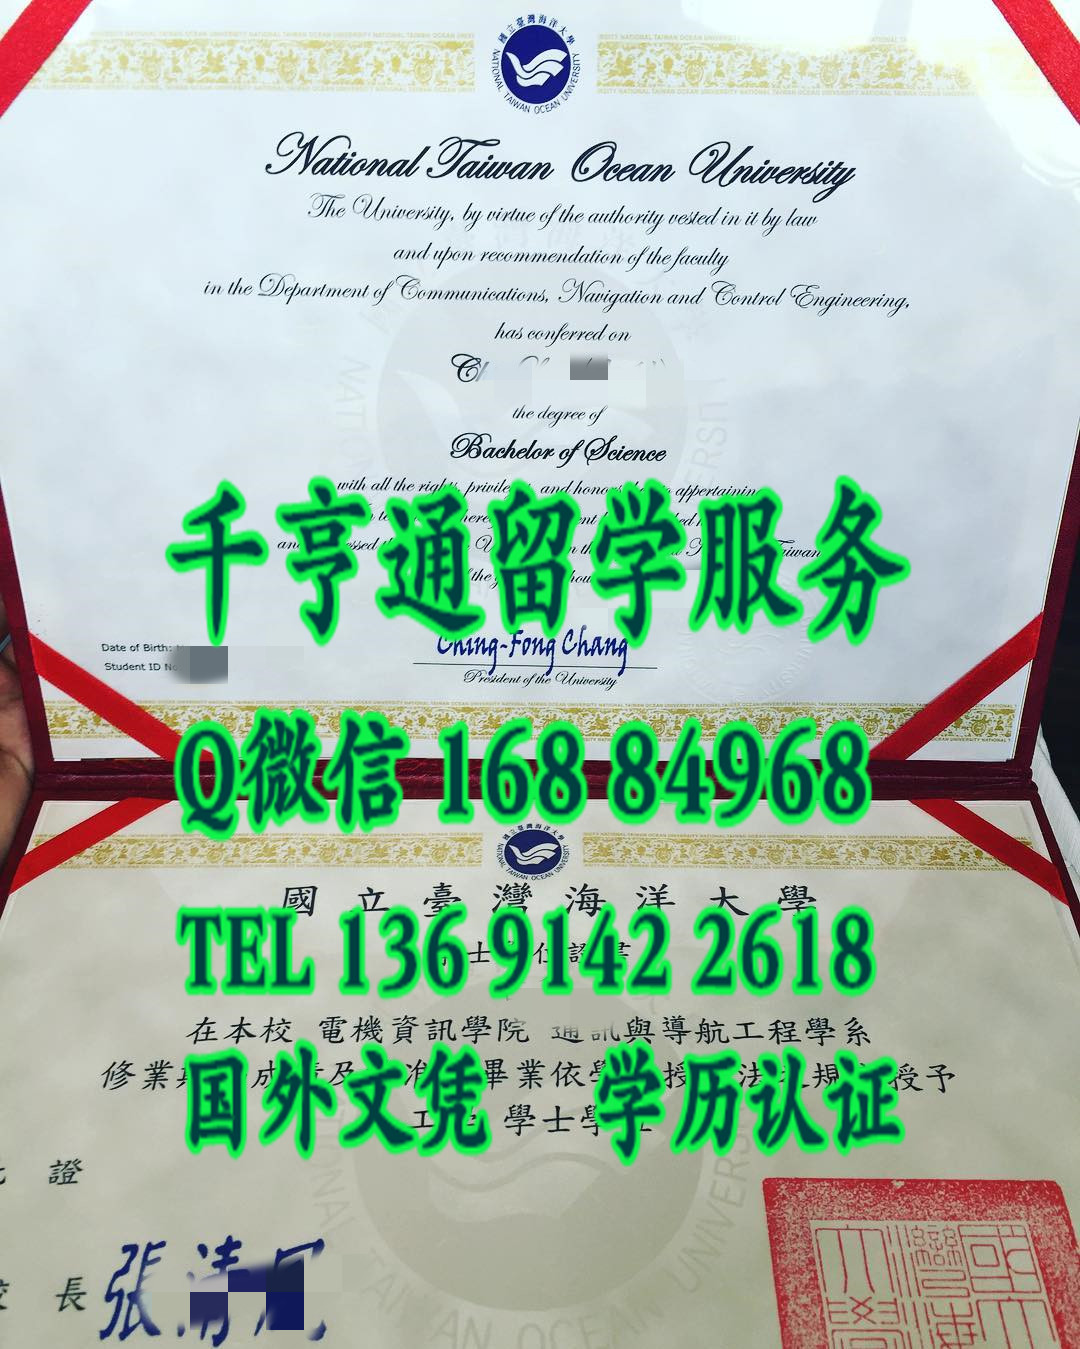 國立臺湾海洋大學畢業證學位證，National Taiwan Ocean University diploma